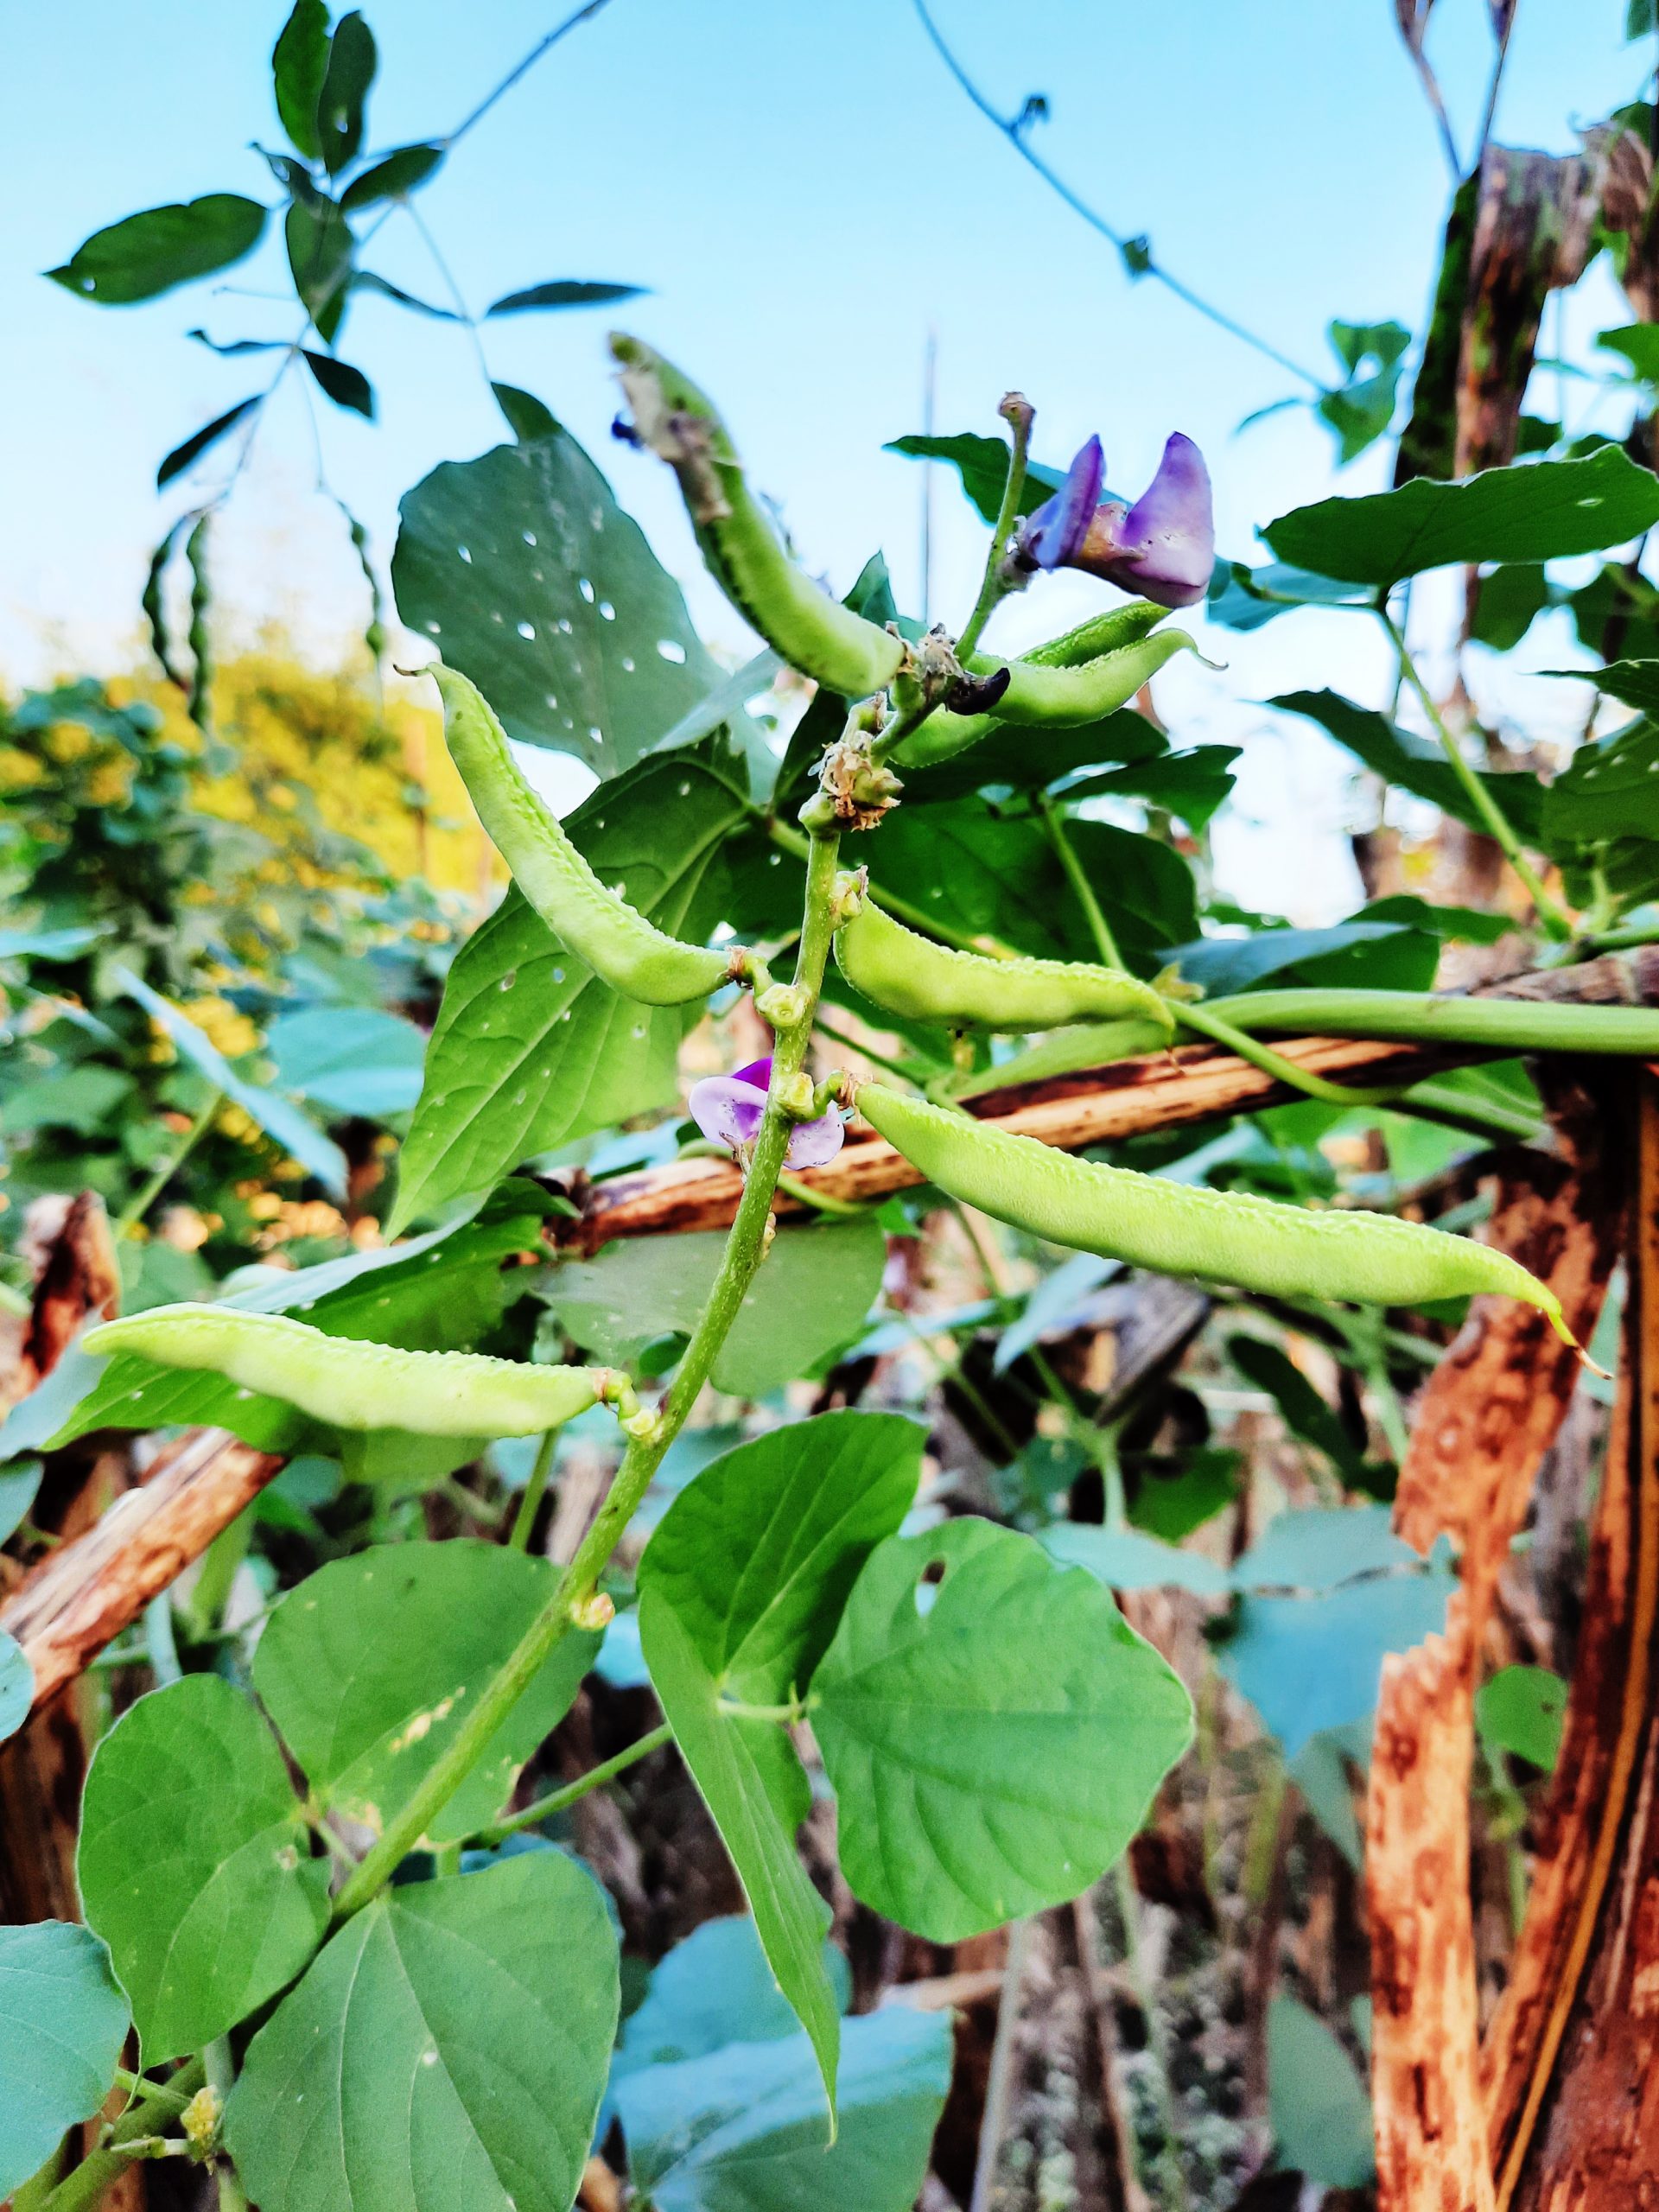 A Hyacinth bean plant